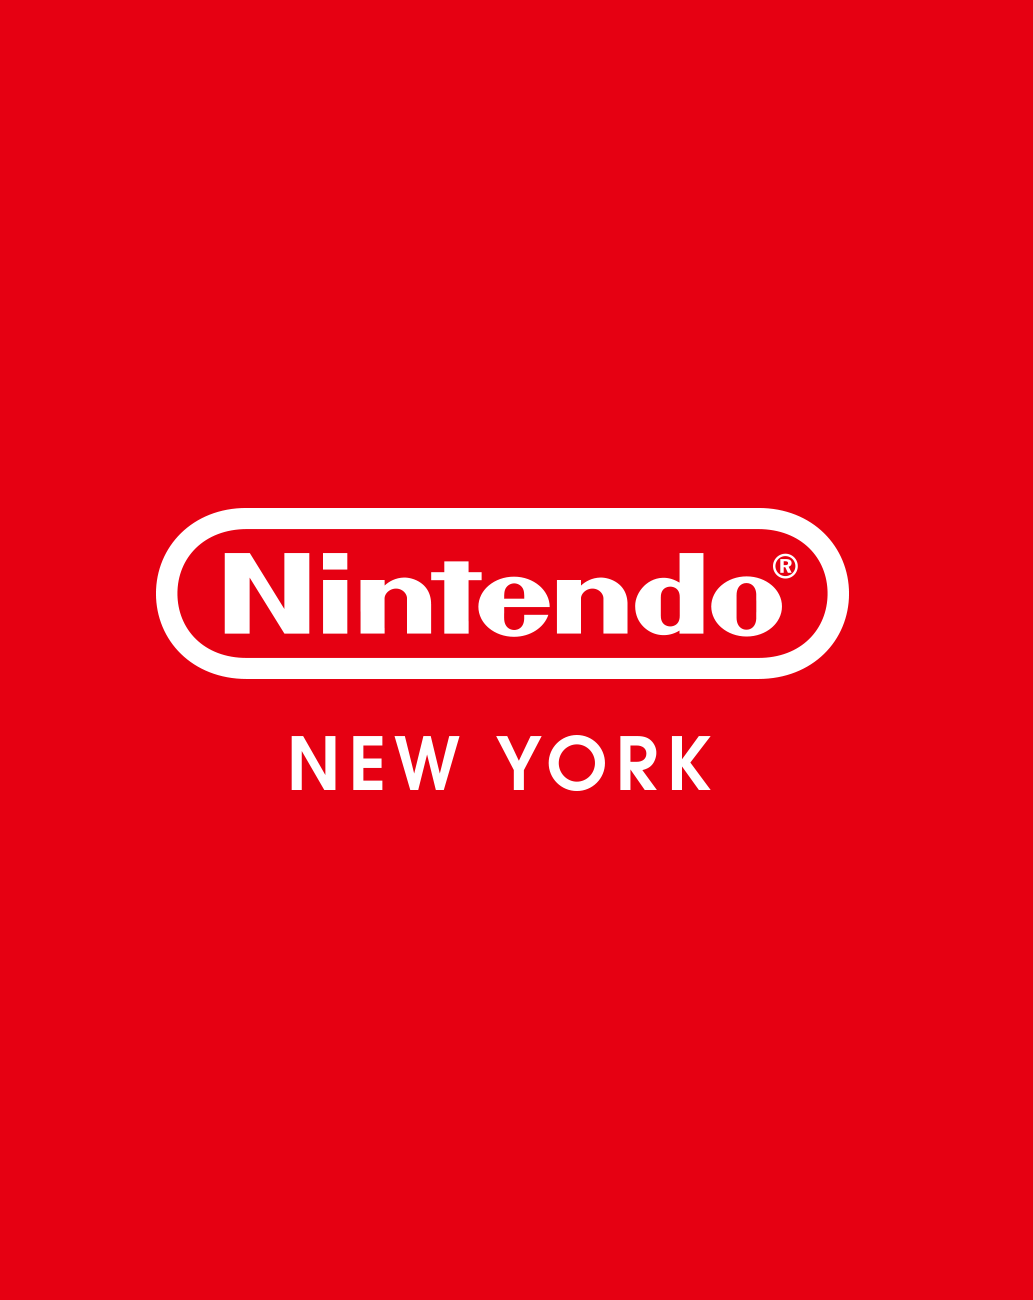 Nintendo New York